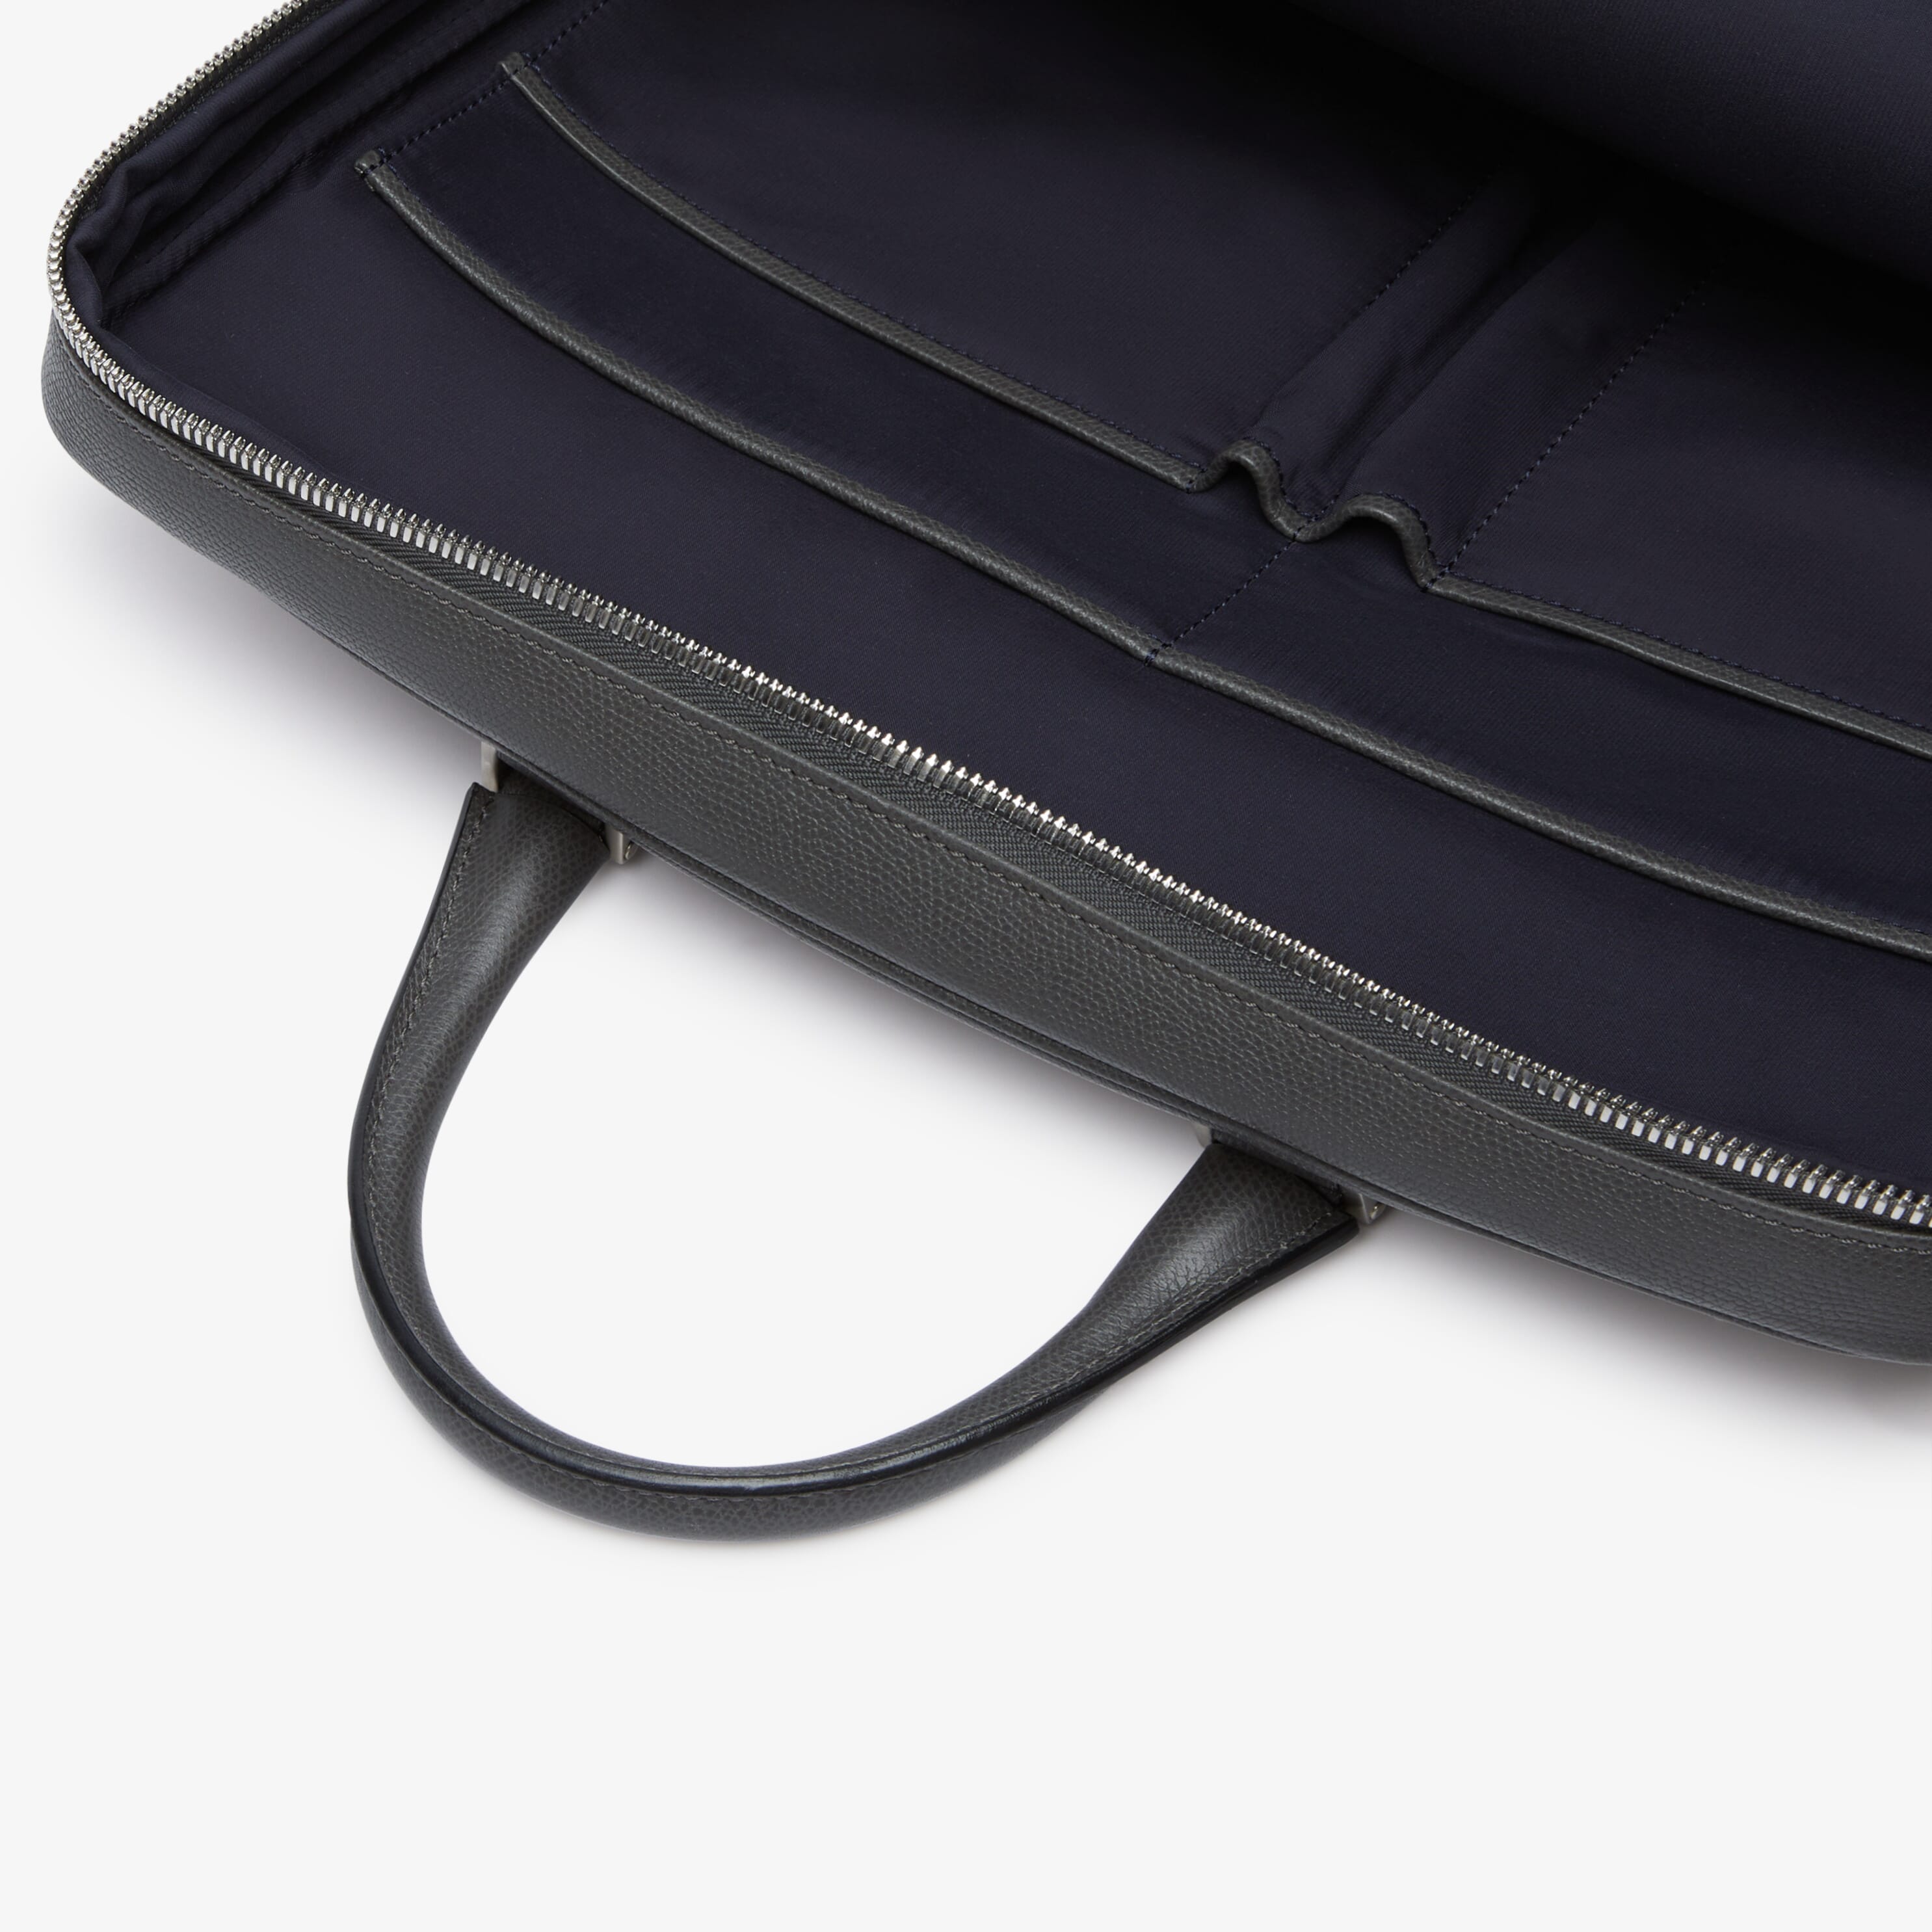 Avietta Briefcase with Zip 24h - Smokey Grey - Vitello VS - Valextra - 5